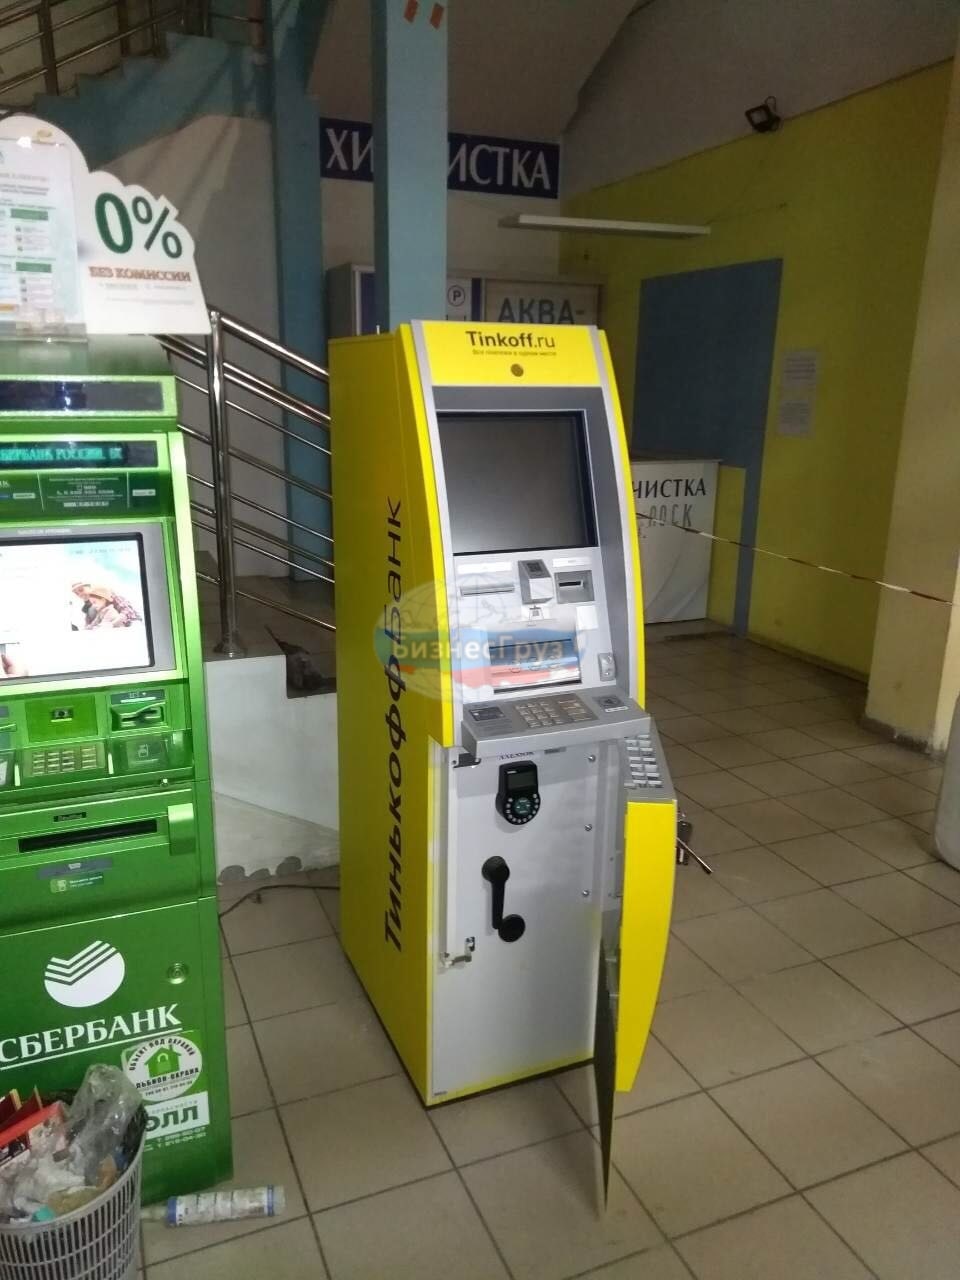 Внести деньги на тинькофф через банкомат сбербанка. Сборка банкомата. Желтый Банкомат. Взломанные банкоматы.